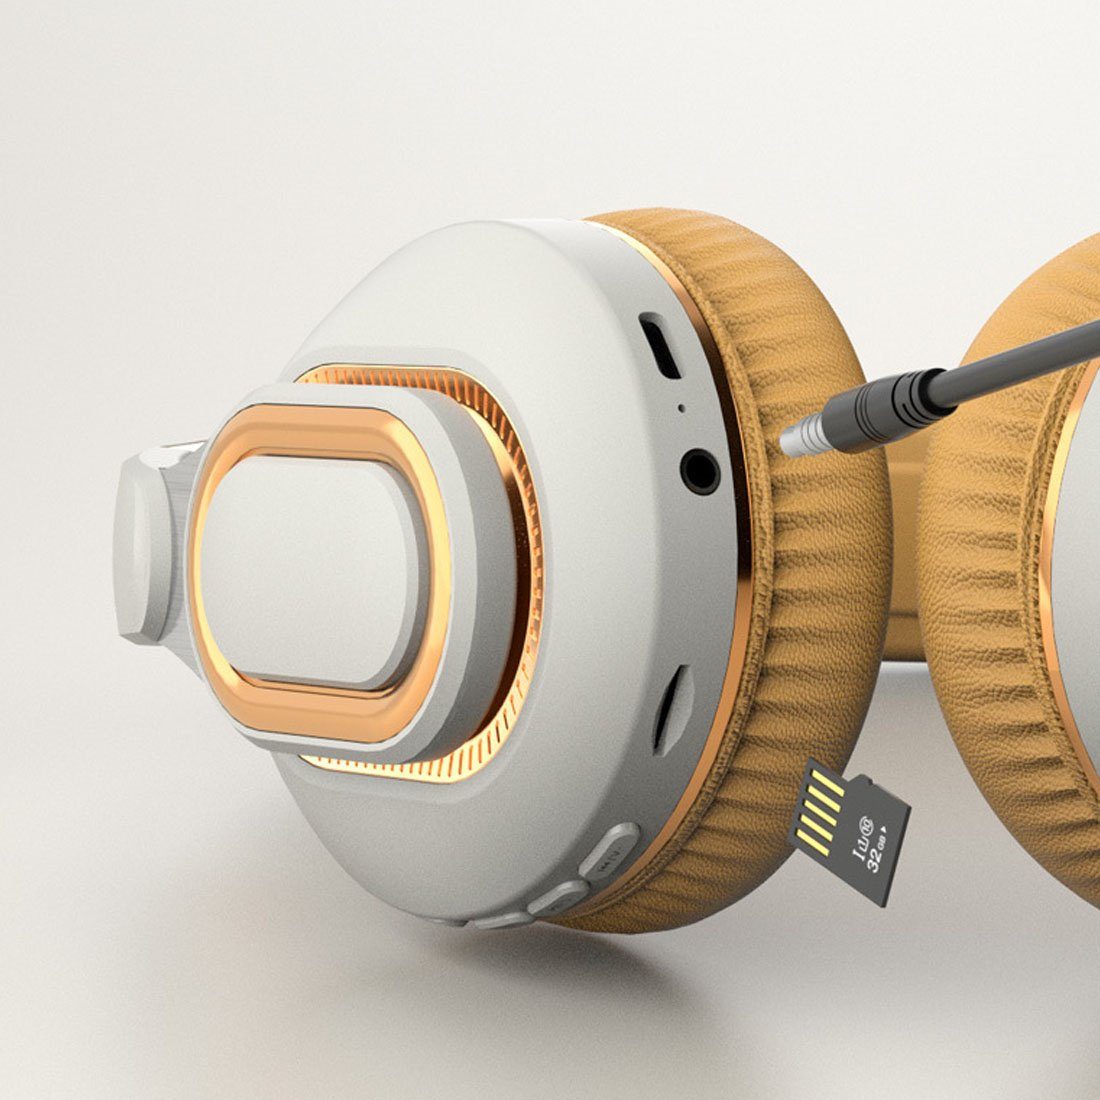 Bluetooth,kabelloses grün Headset Bluetooth-Kopfhörer Gaming-Sport-Headset.Zusammenklappbar mit DÖRÖY